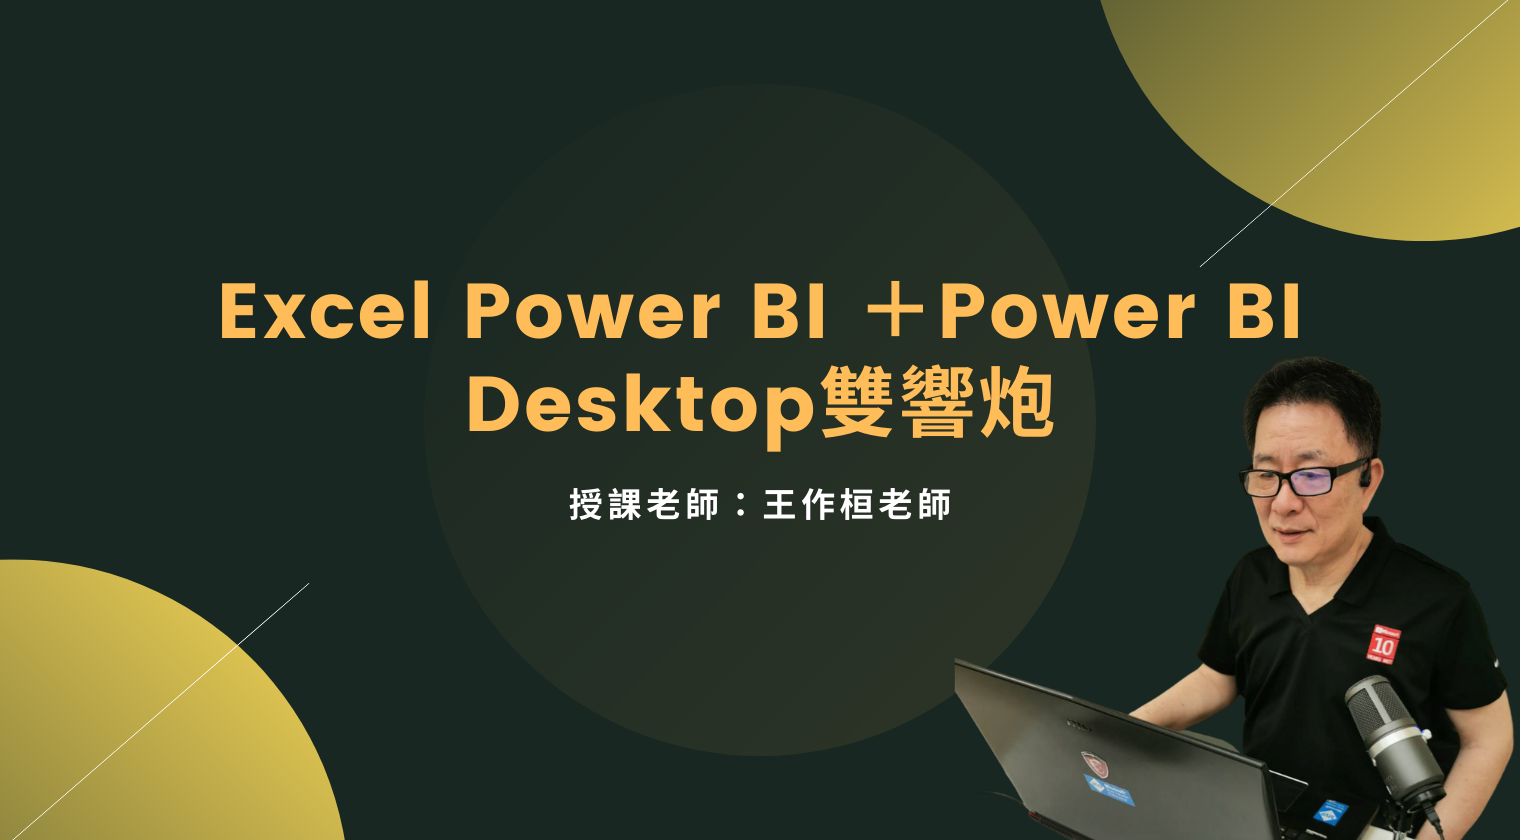 Excel Power BI ＋Power BI Desktop雙響炮 - MasterTalks 內容電力公司